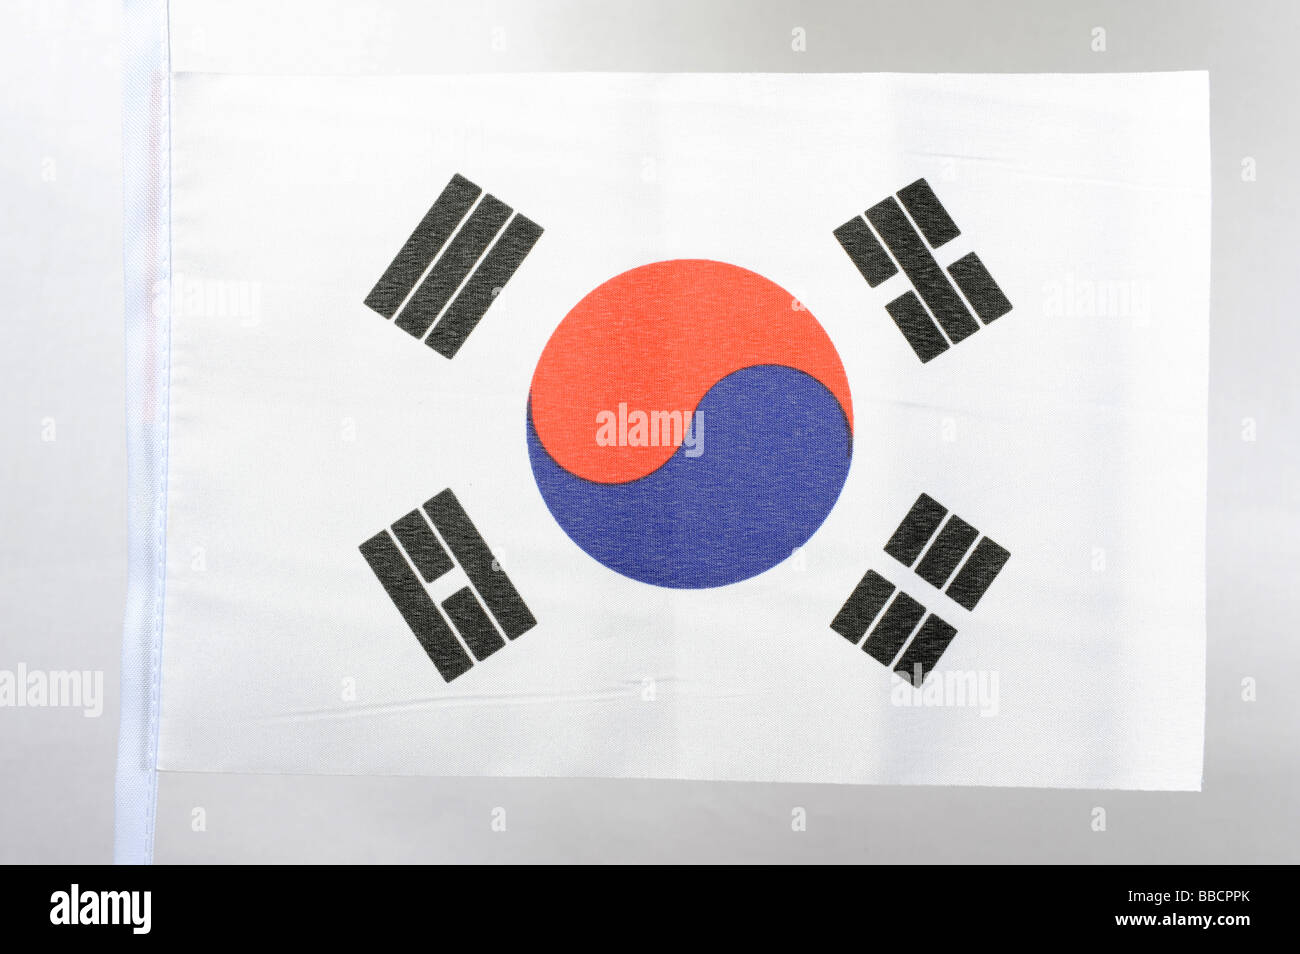 National flag of South Korea Stock Photo